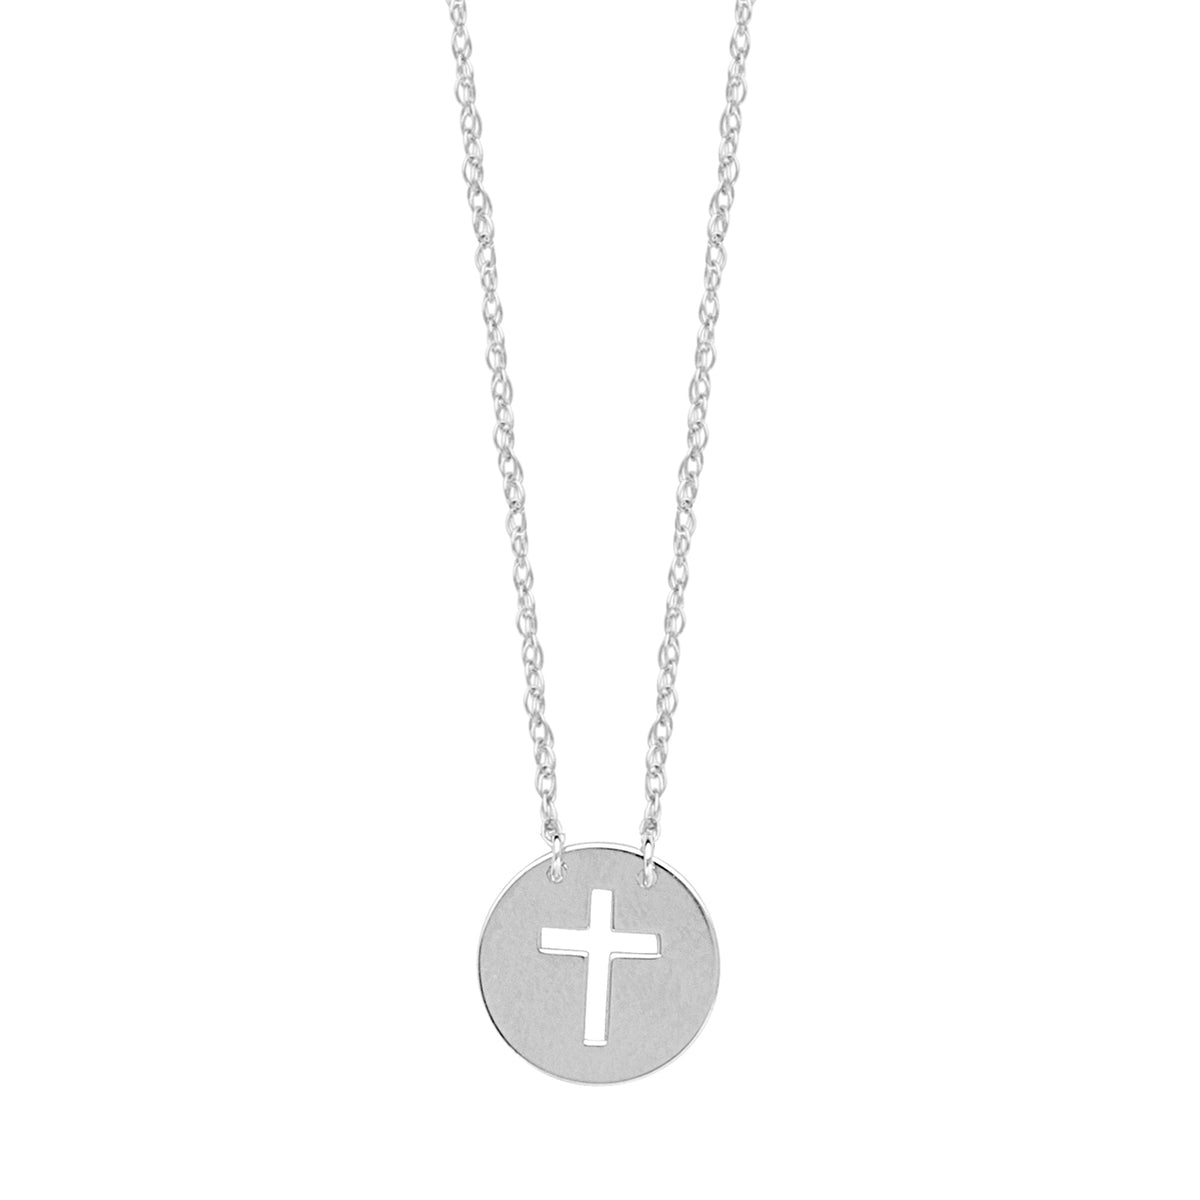 14K White Gold Mini Cross Pendant Necklace, 16" To 18" Adjustable